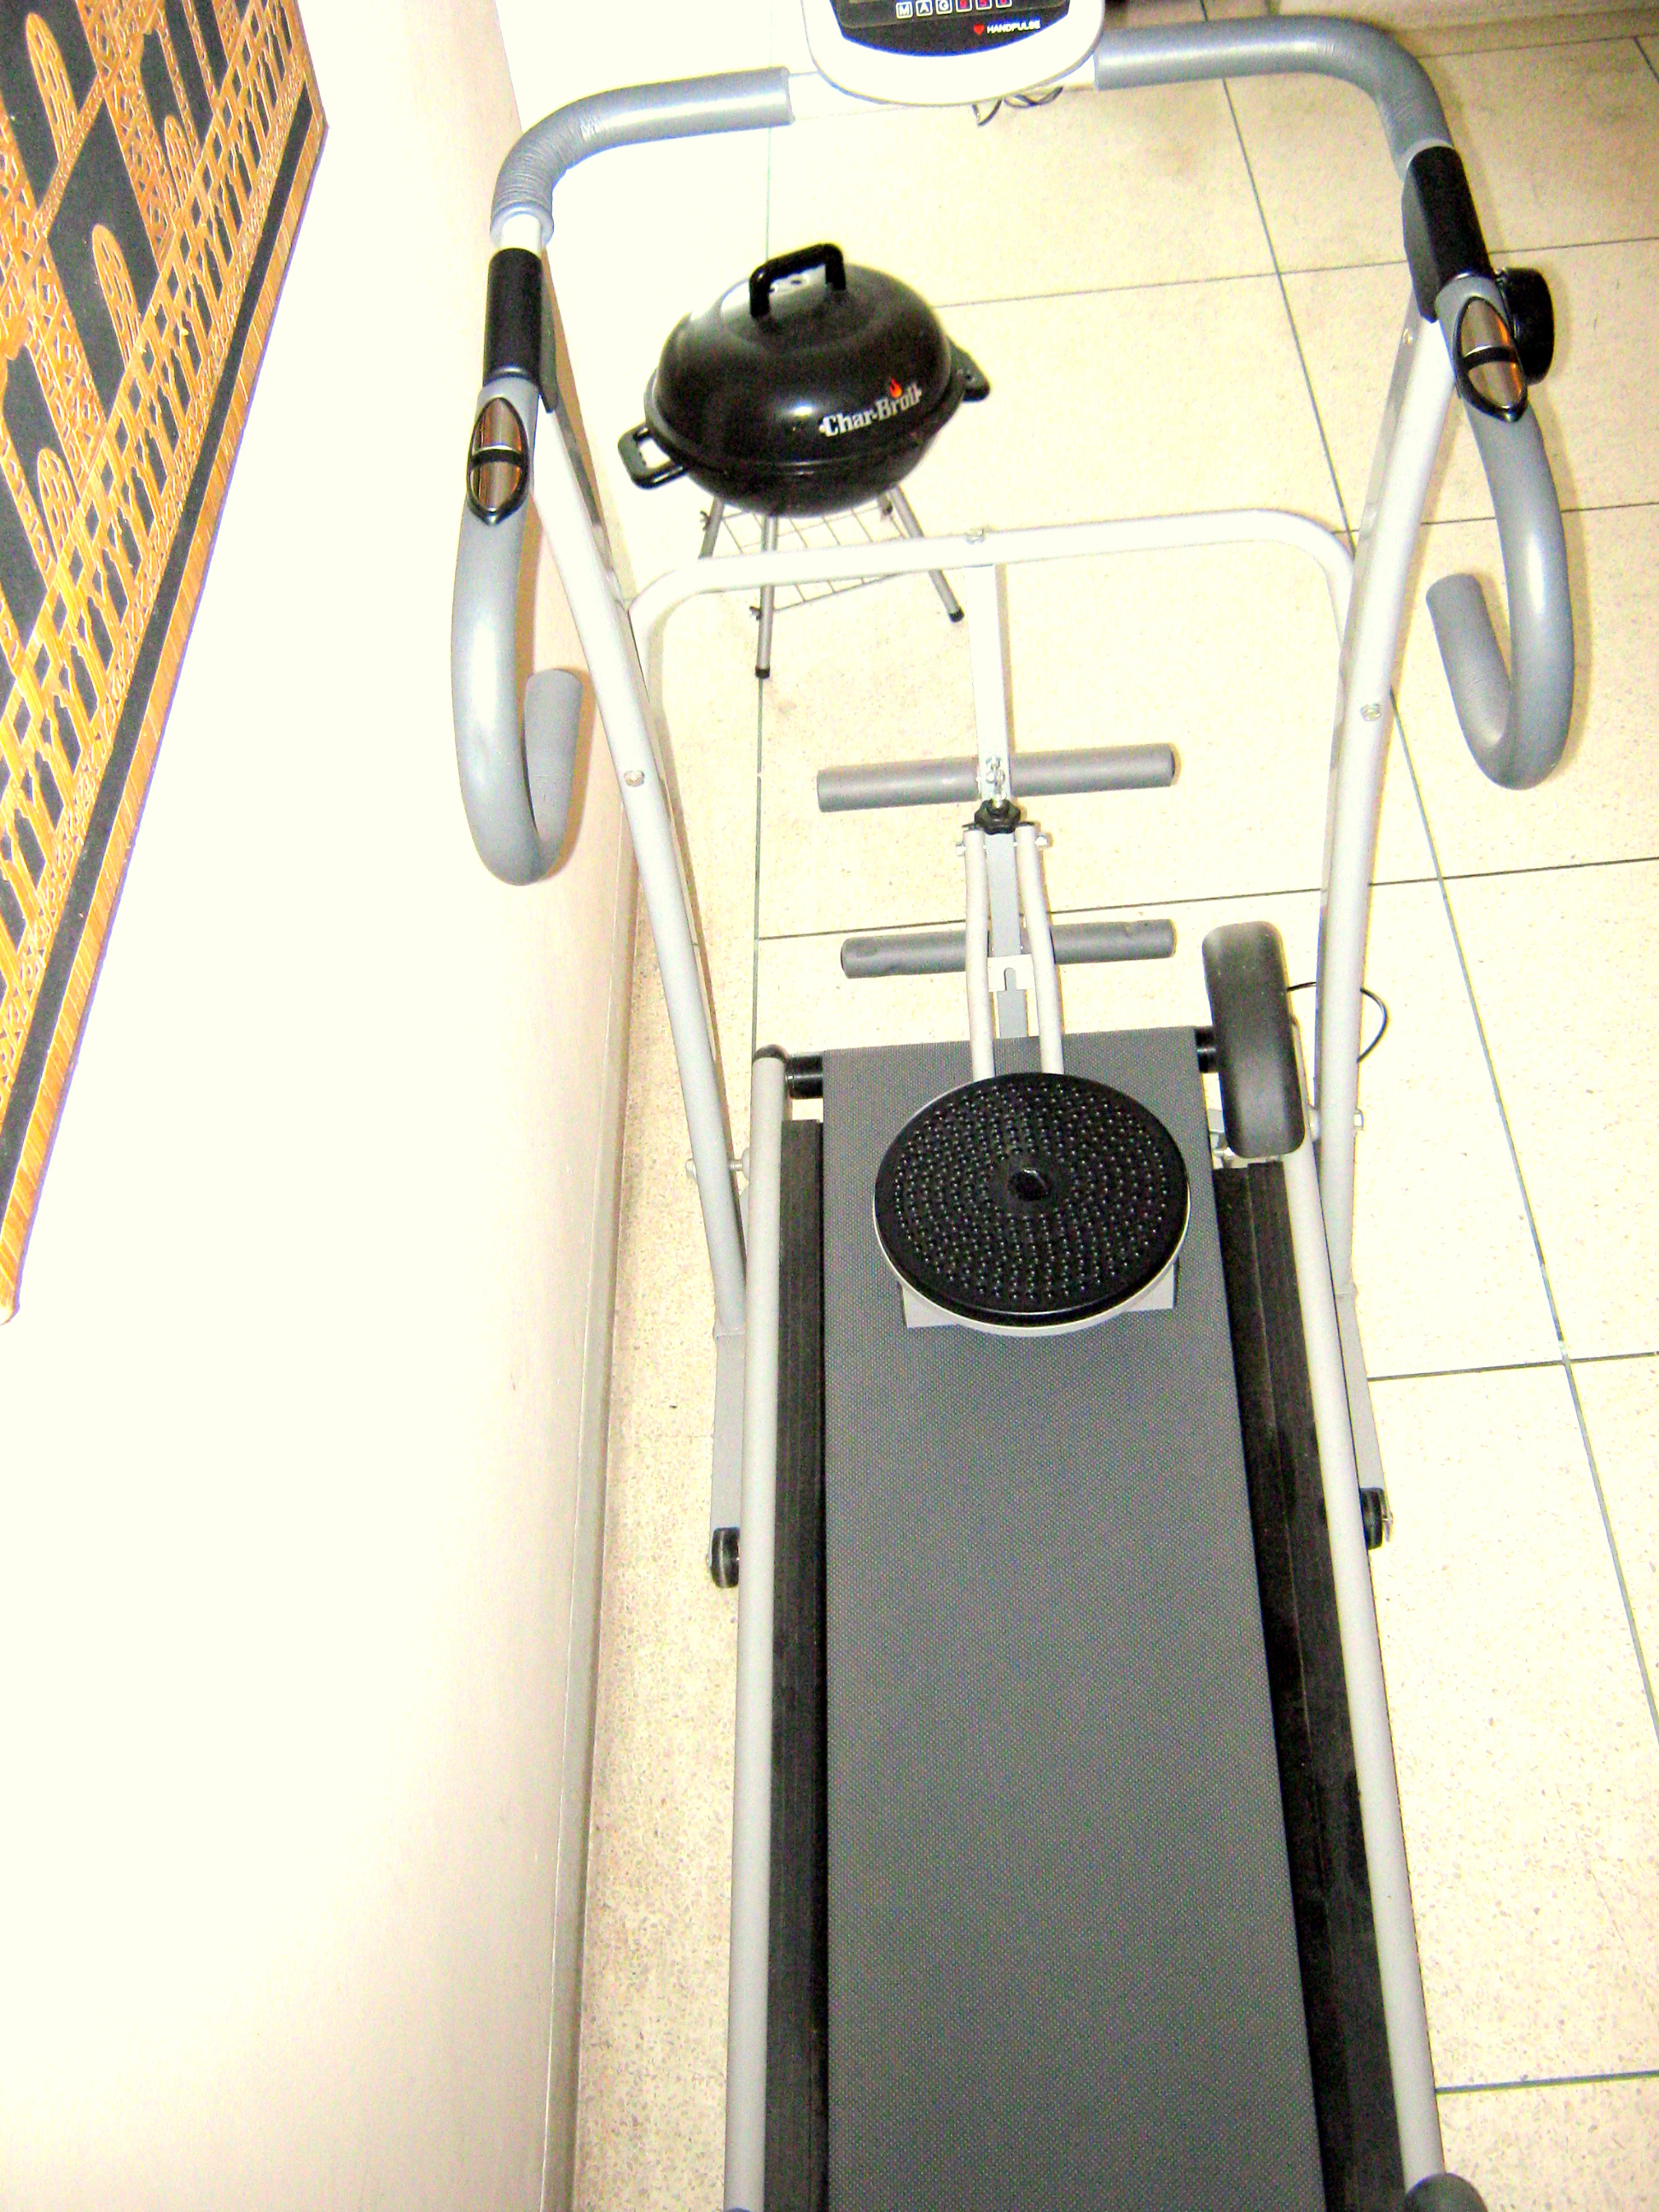 3 in 1 treadmill urgent sale large image 1